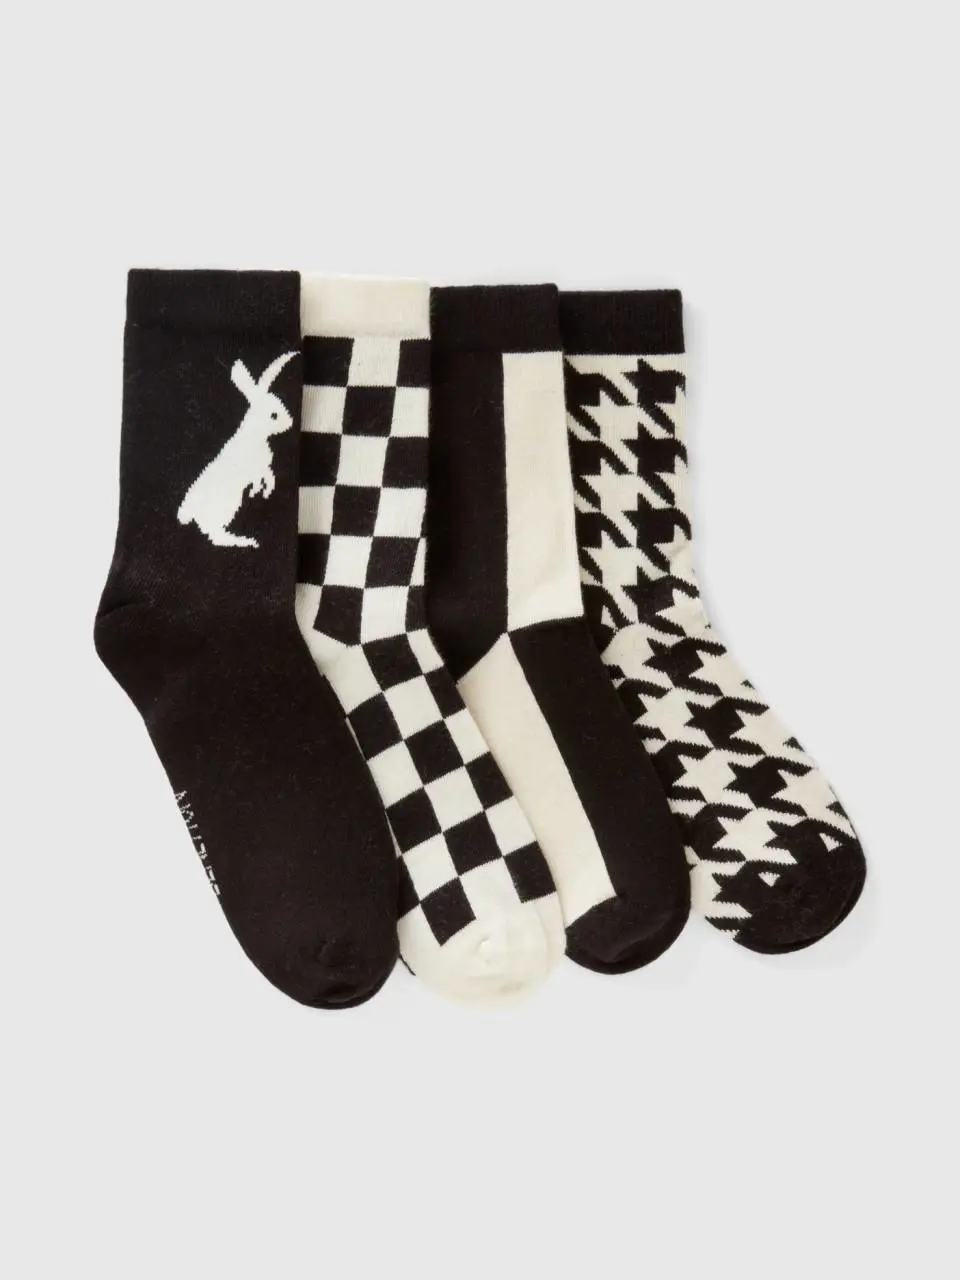 Benetton set of black and white jacquard socks. 1